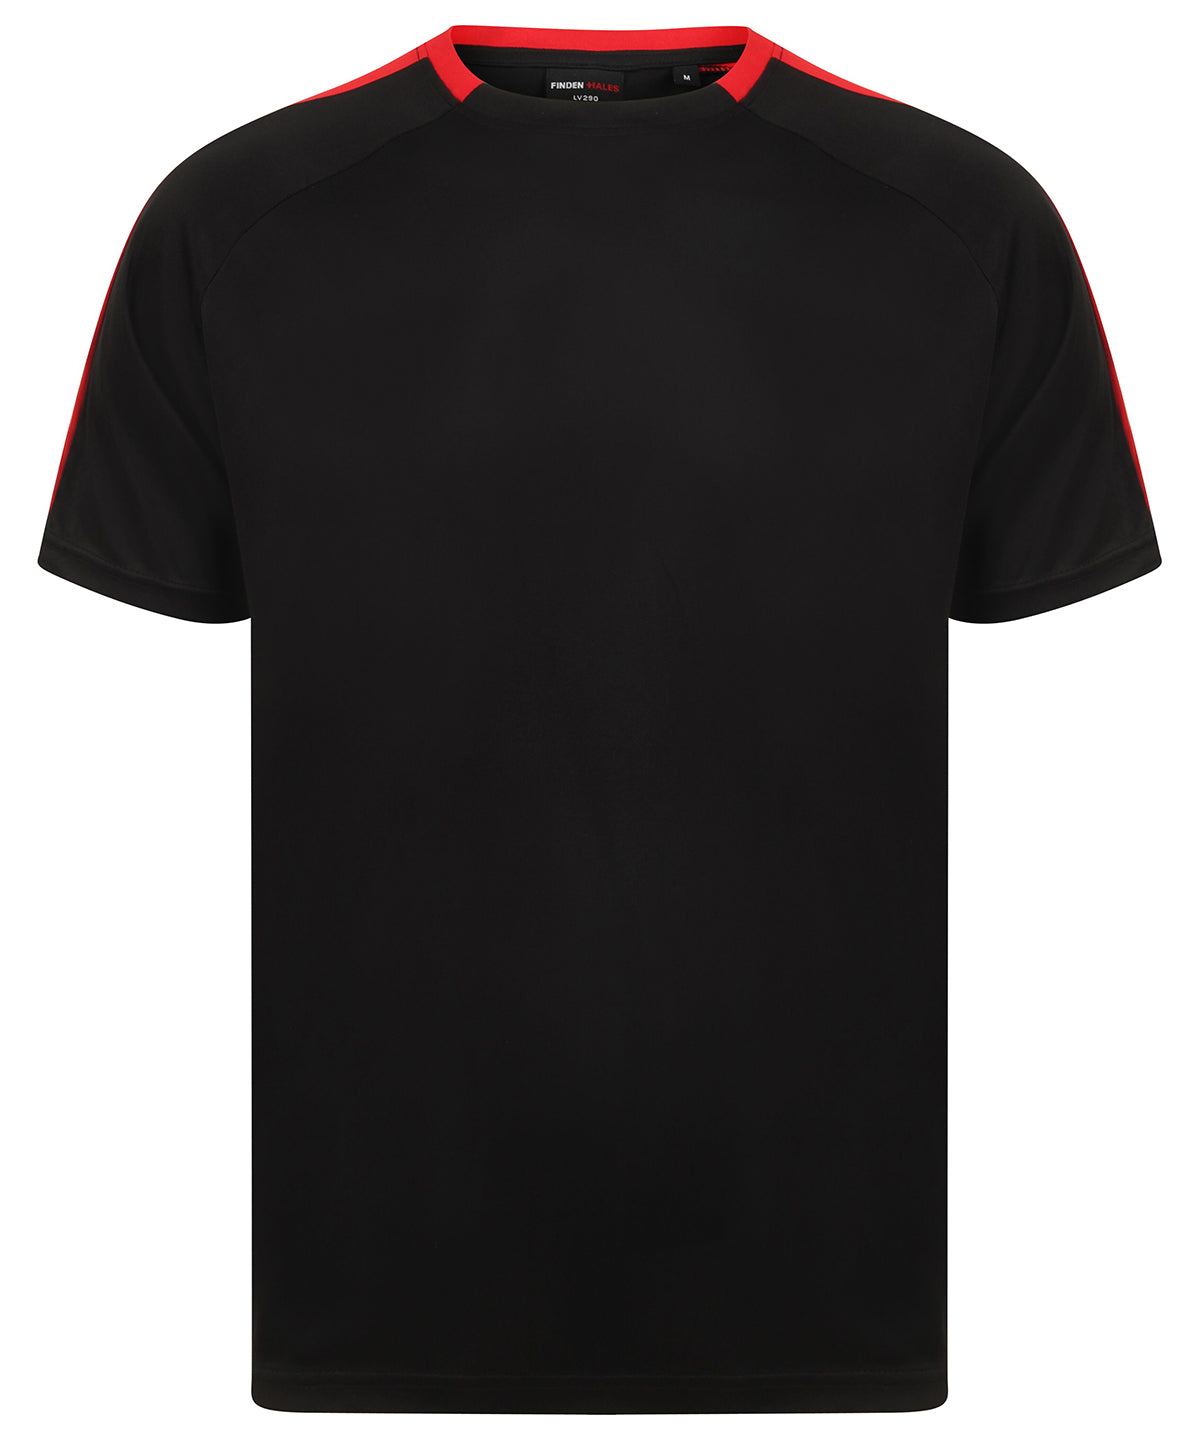 Unisex team t-shirt